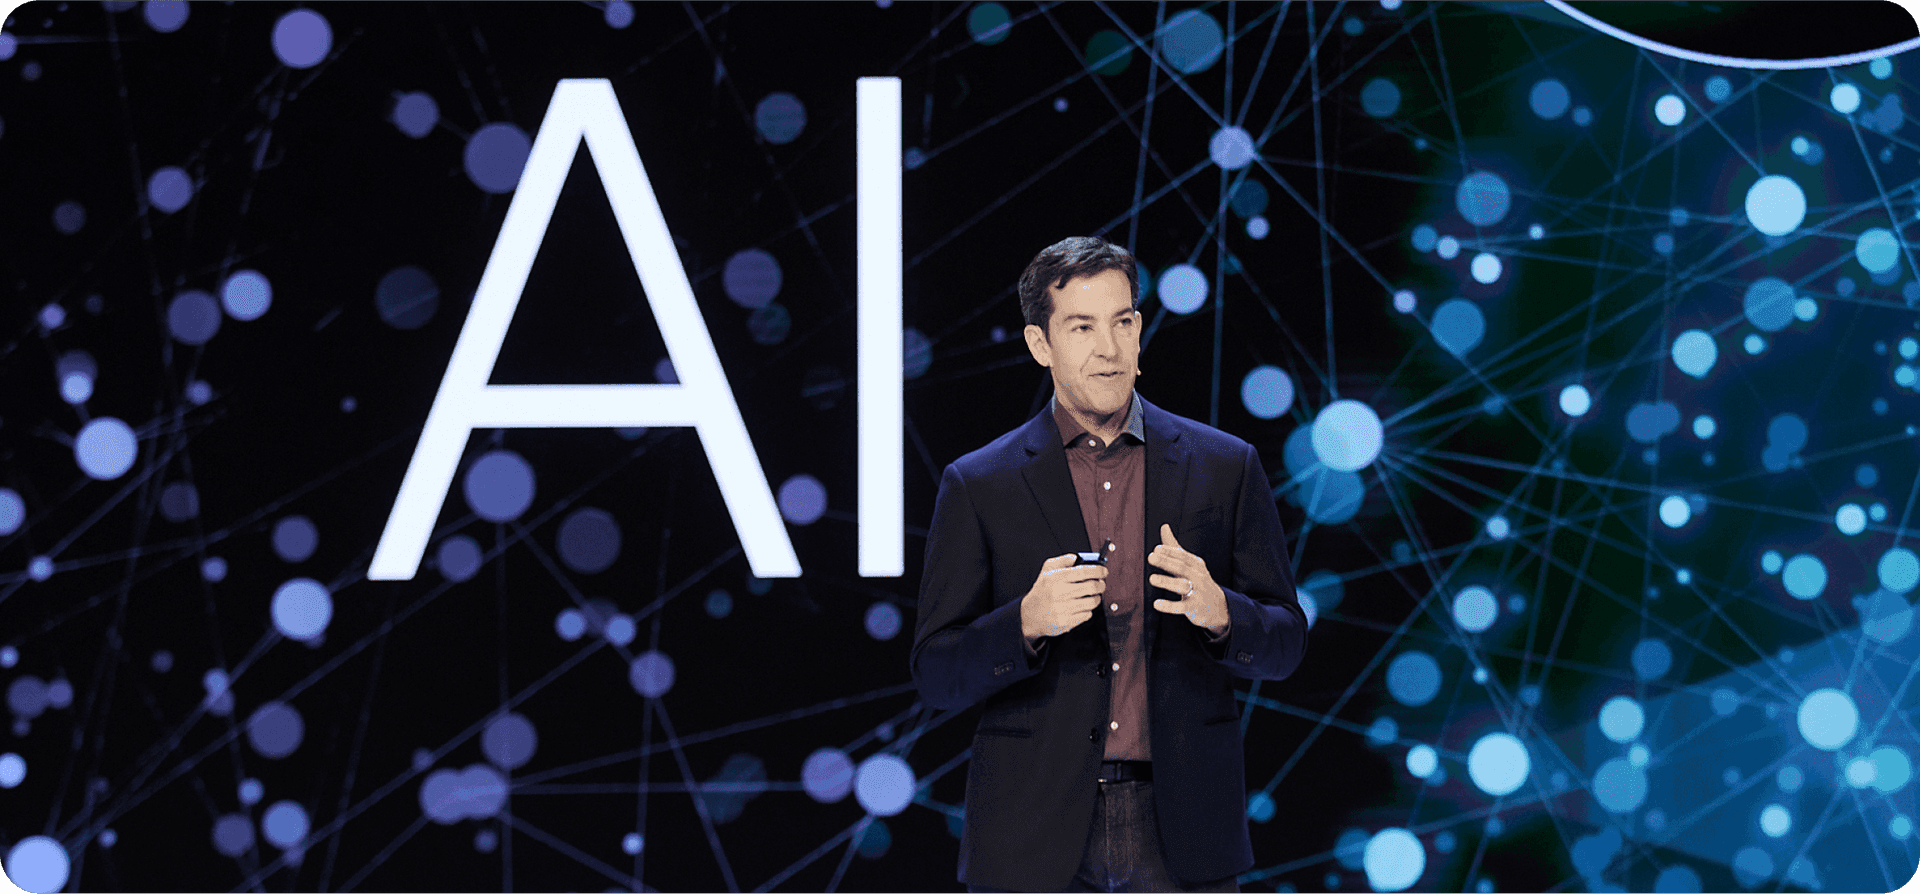 Video of Okta CEO Todd McKinnon discussing the future of AI and Identity